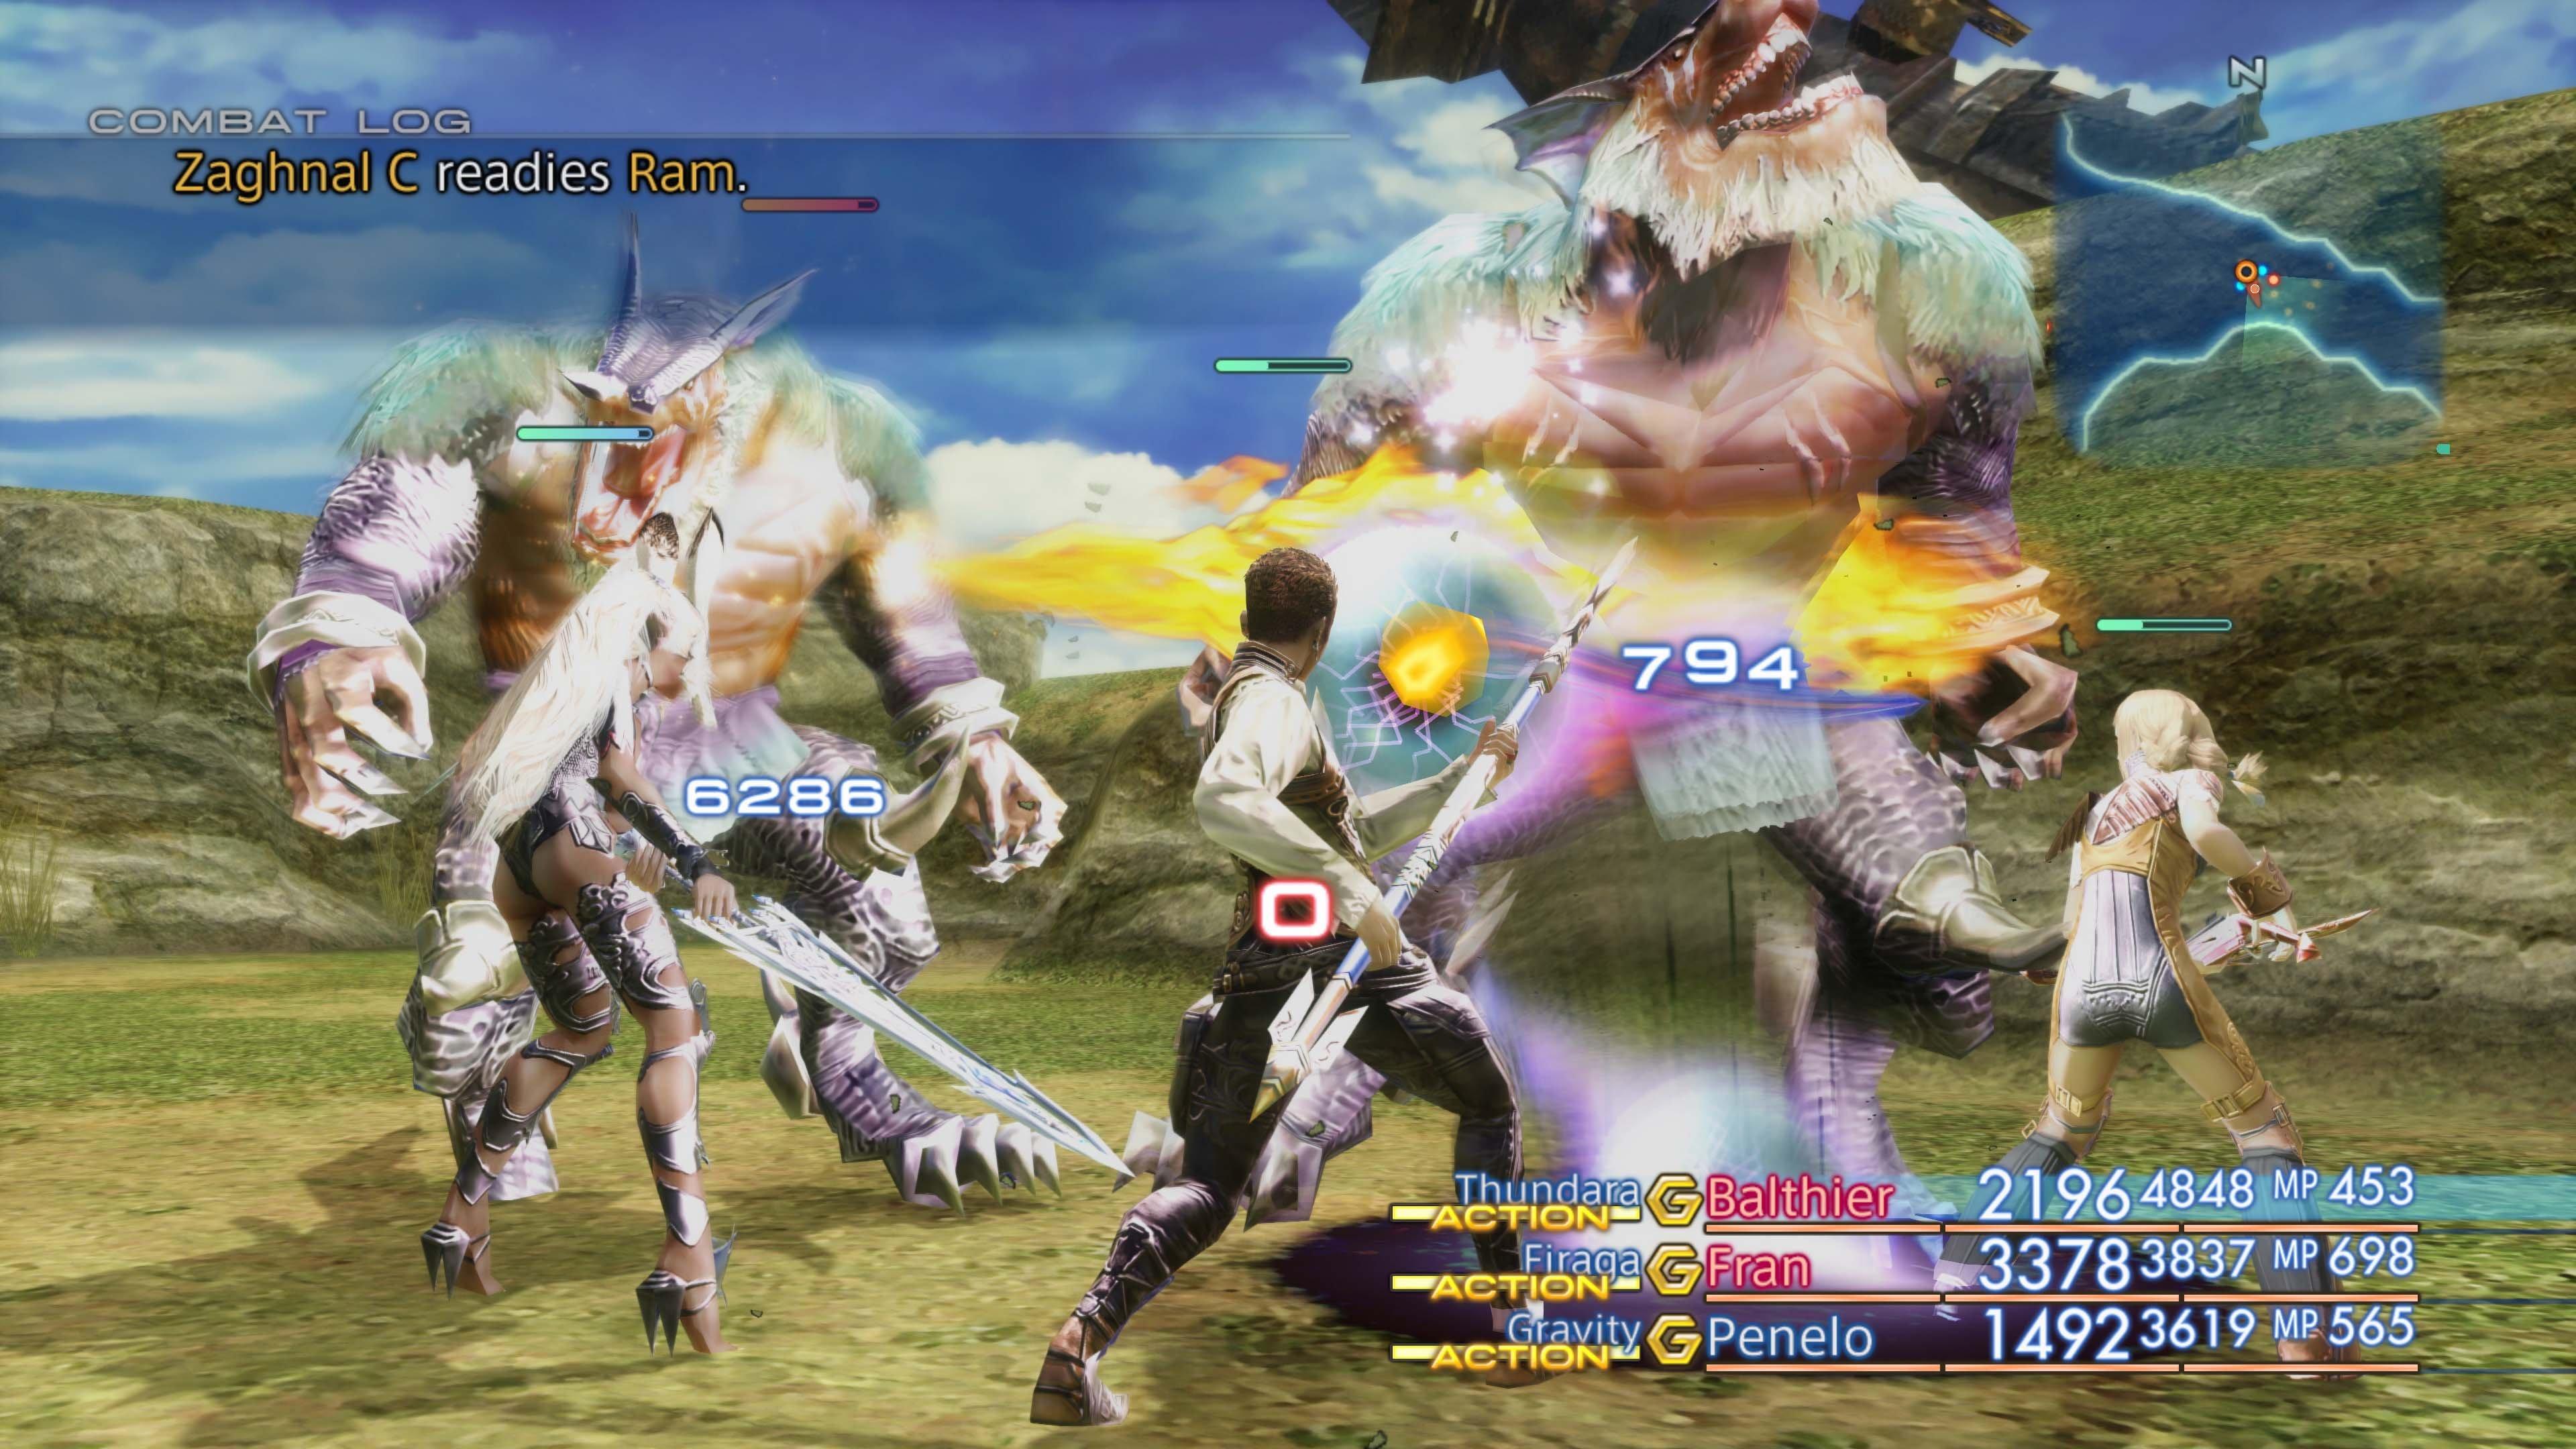  Final Fantasy XII The Zodiac Age - Nintendo Switch : Square  Enix LLC: Video Games